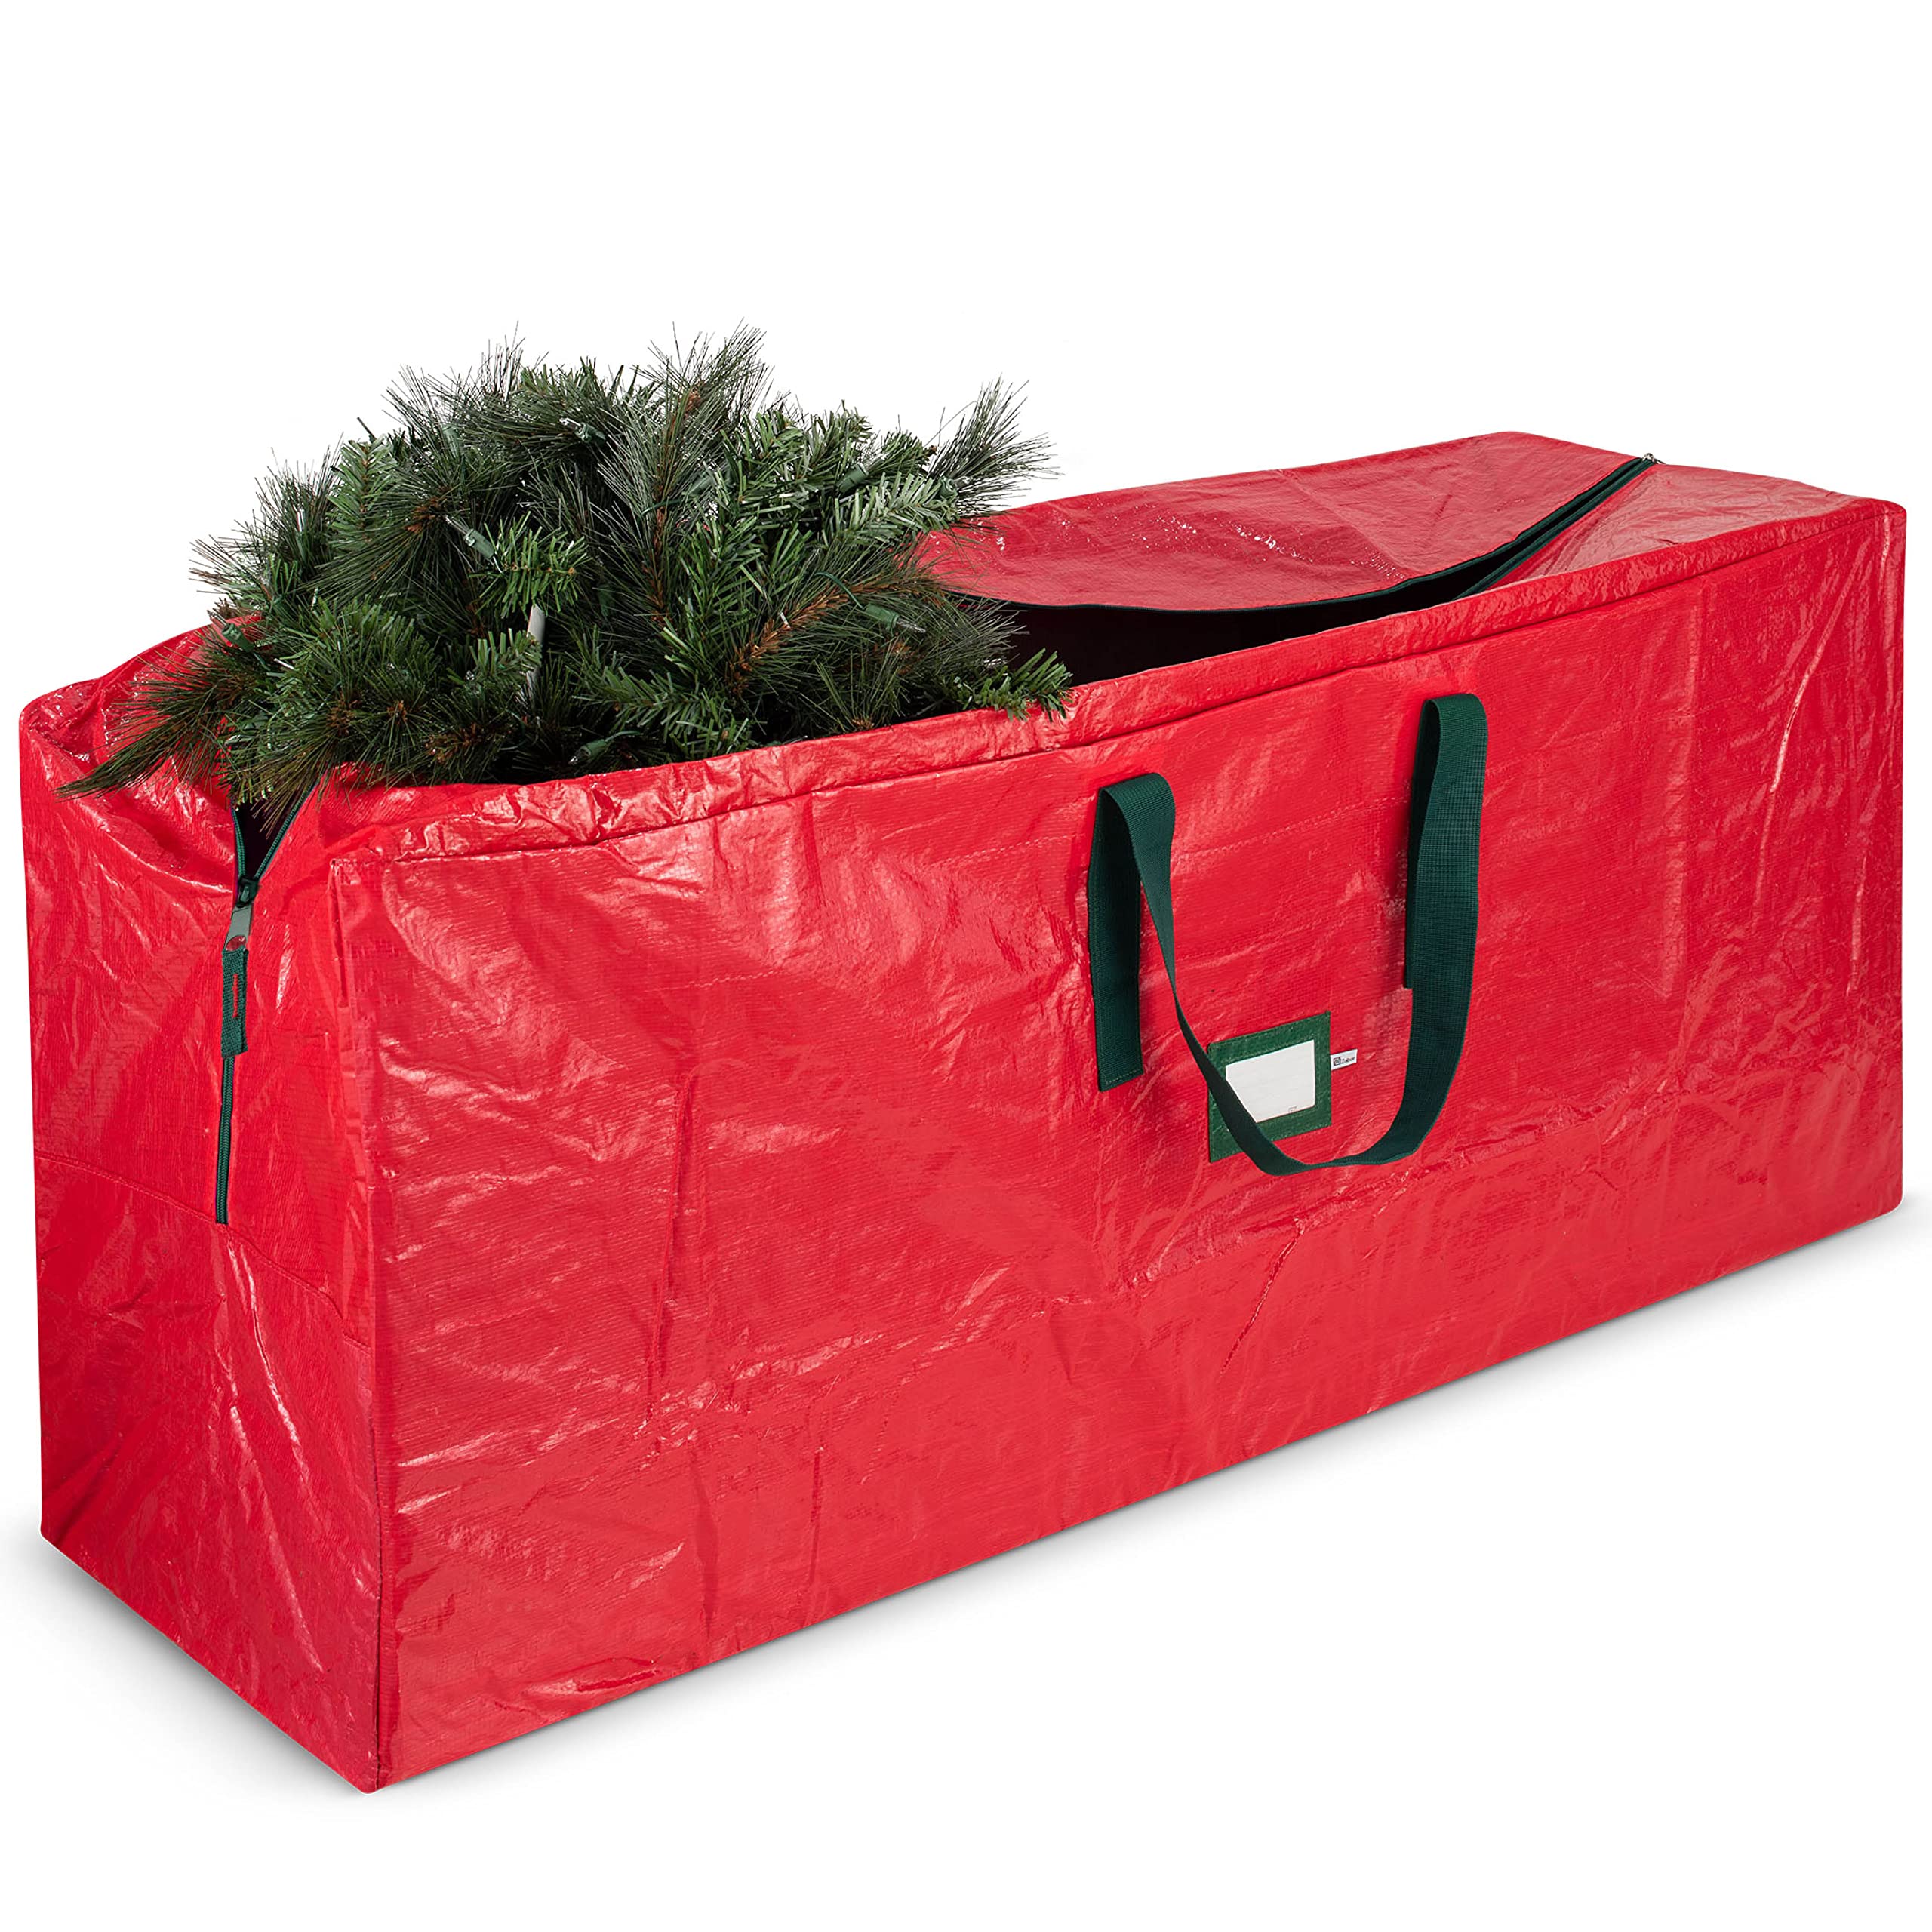 Where To Buy Christmas Tree Storage Bag?